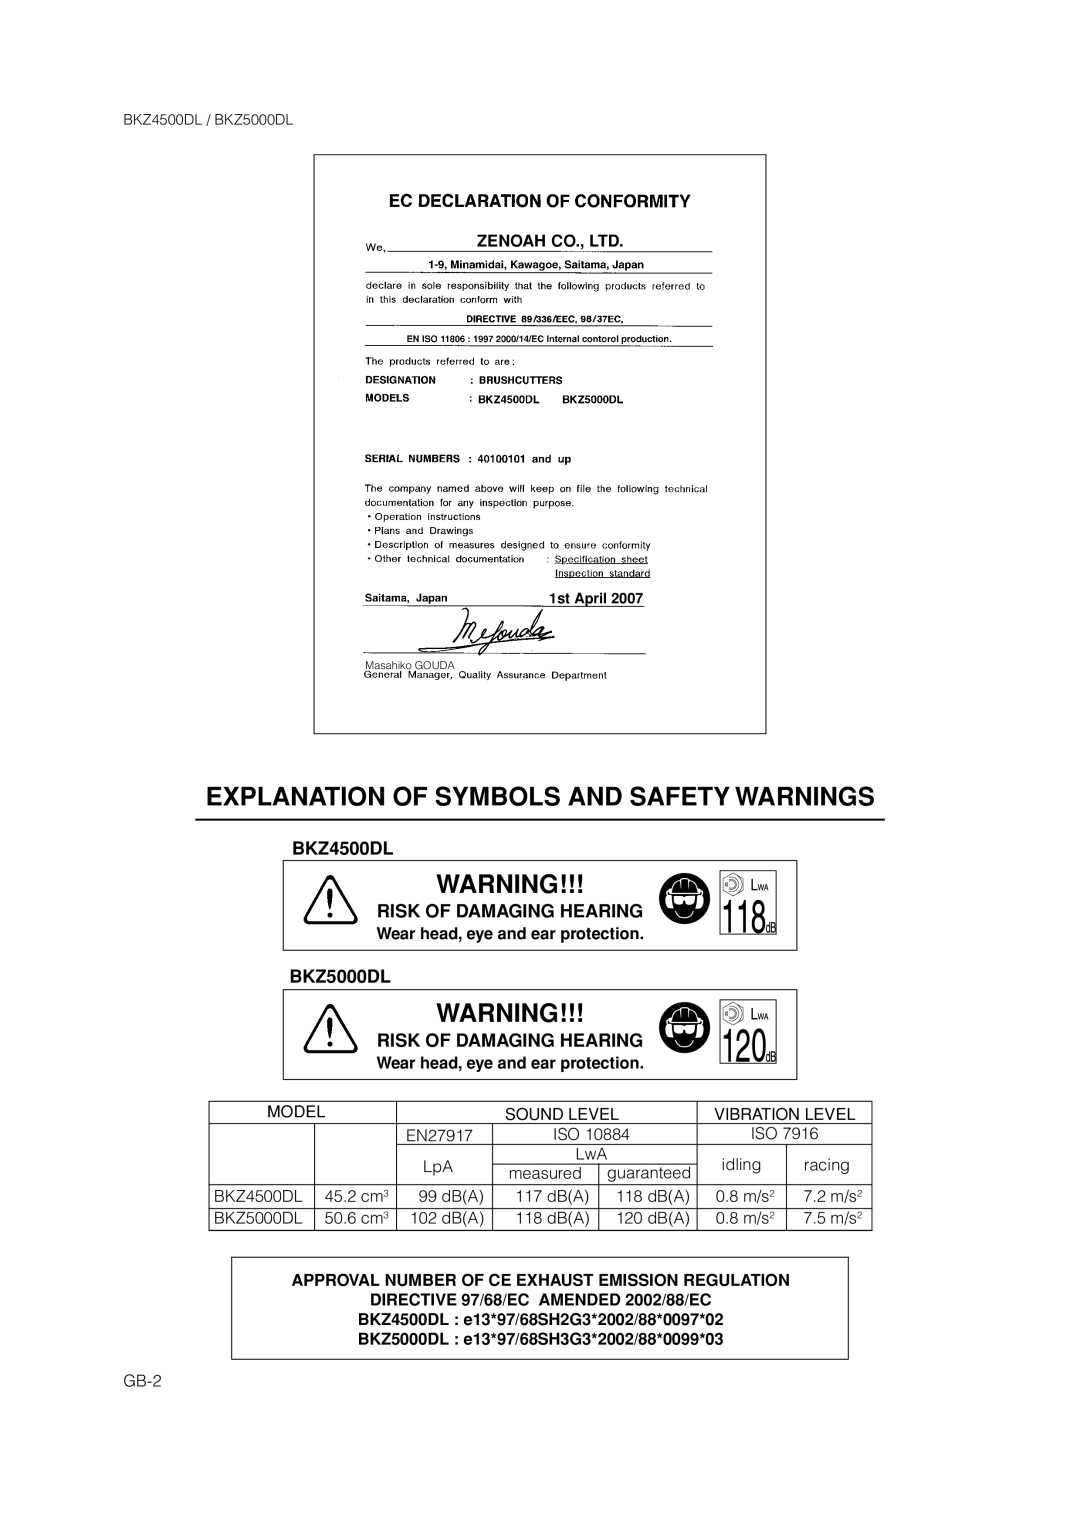 Zenoah BKZ5000DL Wear head, eye and ear protection, Approval Number Of Ce Exhaust Emission Regulation, BKZ4500DL 